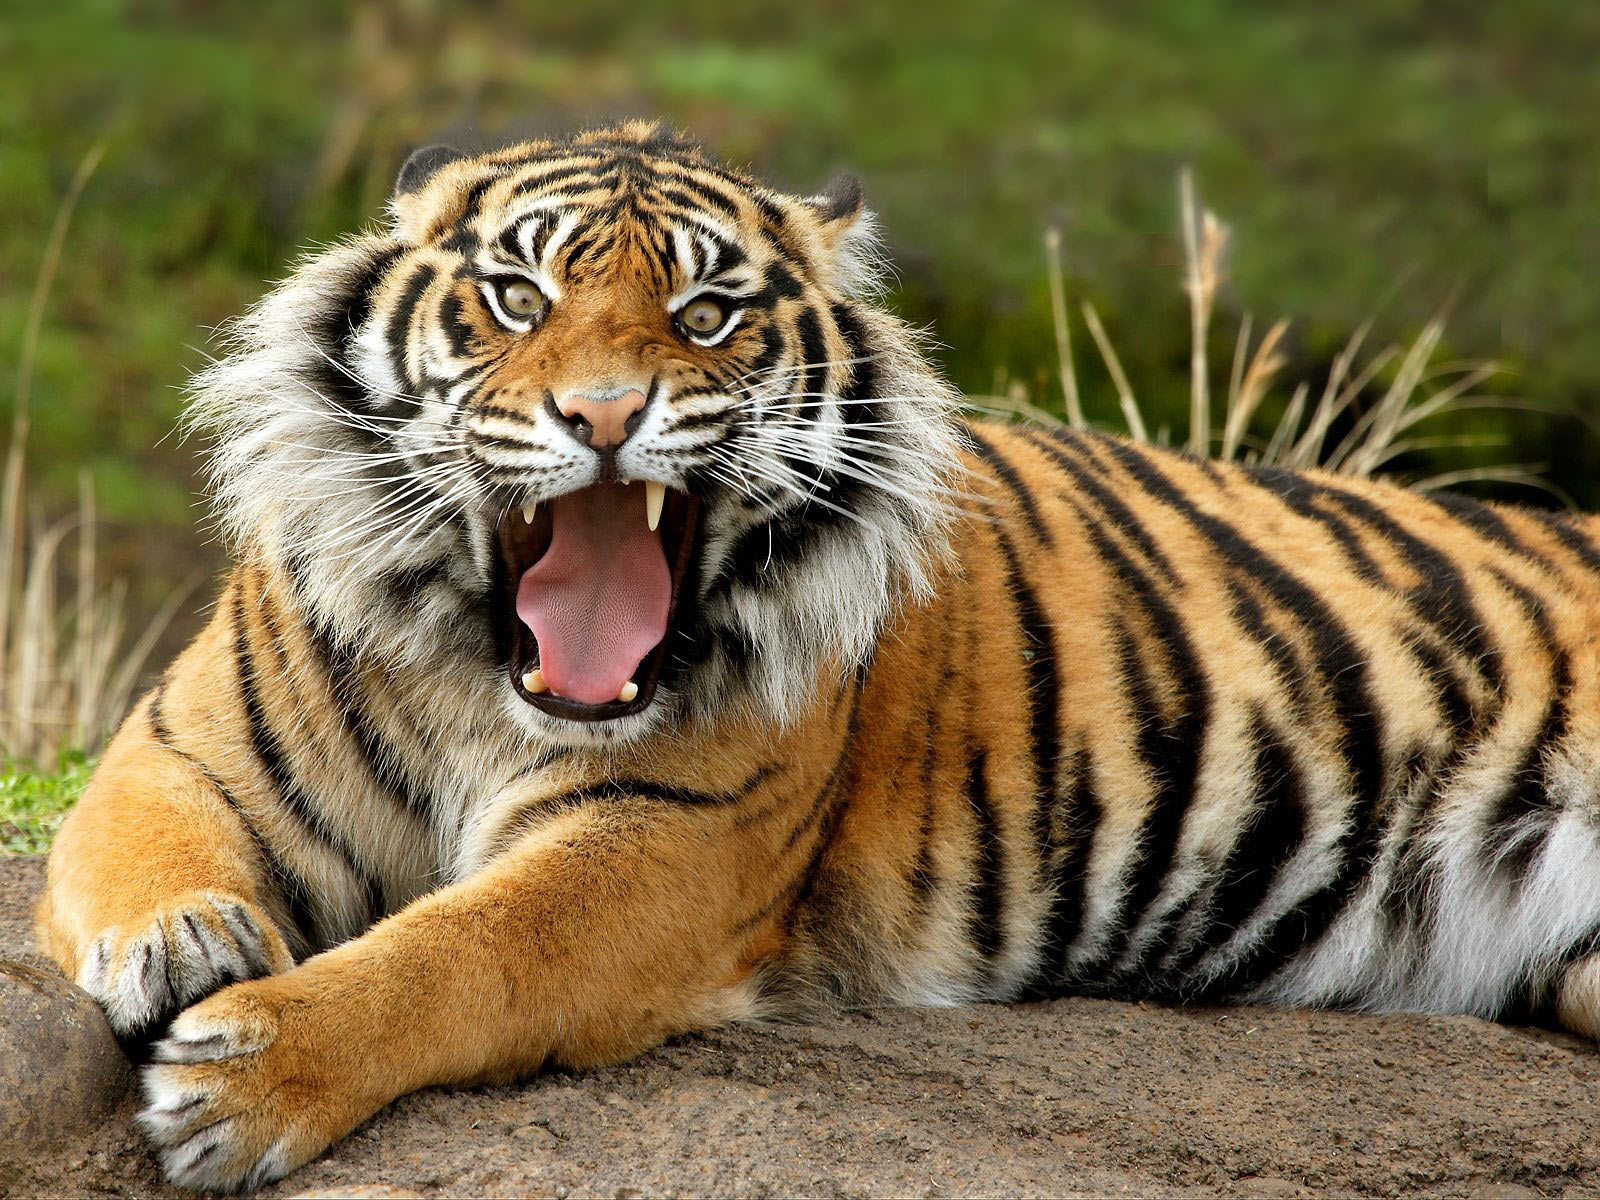 Ferocious Tiger tiger images